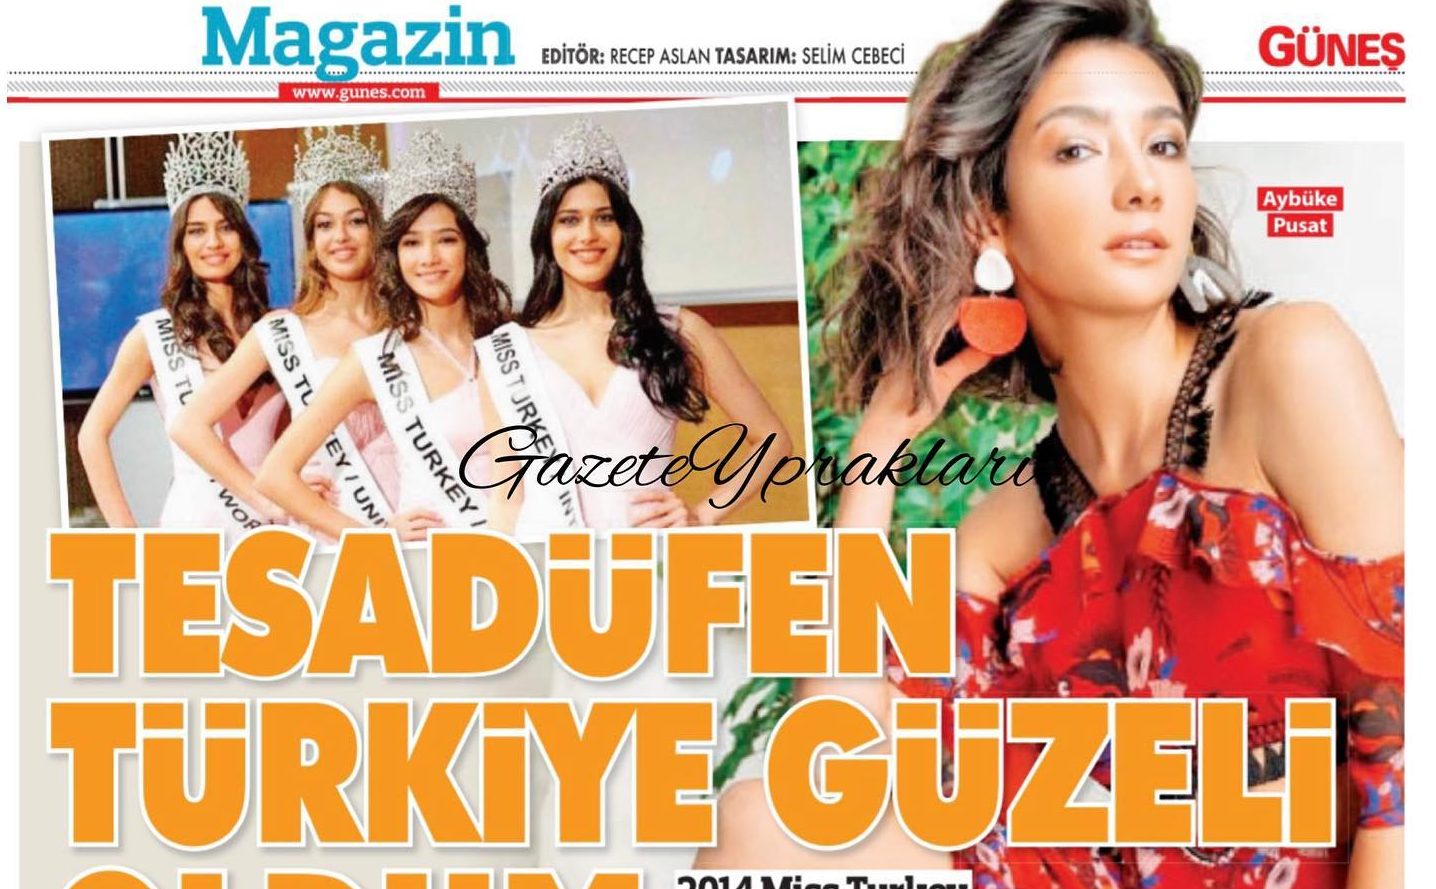 Aybuke Pusat Spoke About The Beginning Of Her Acting Career Turkish